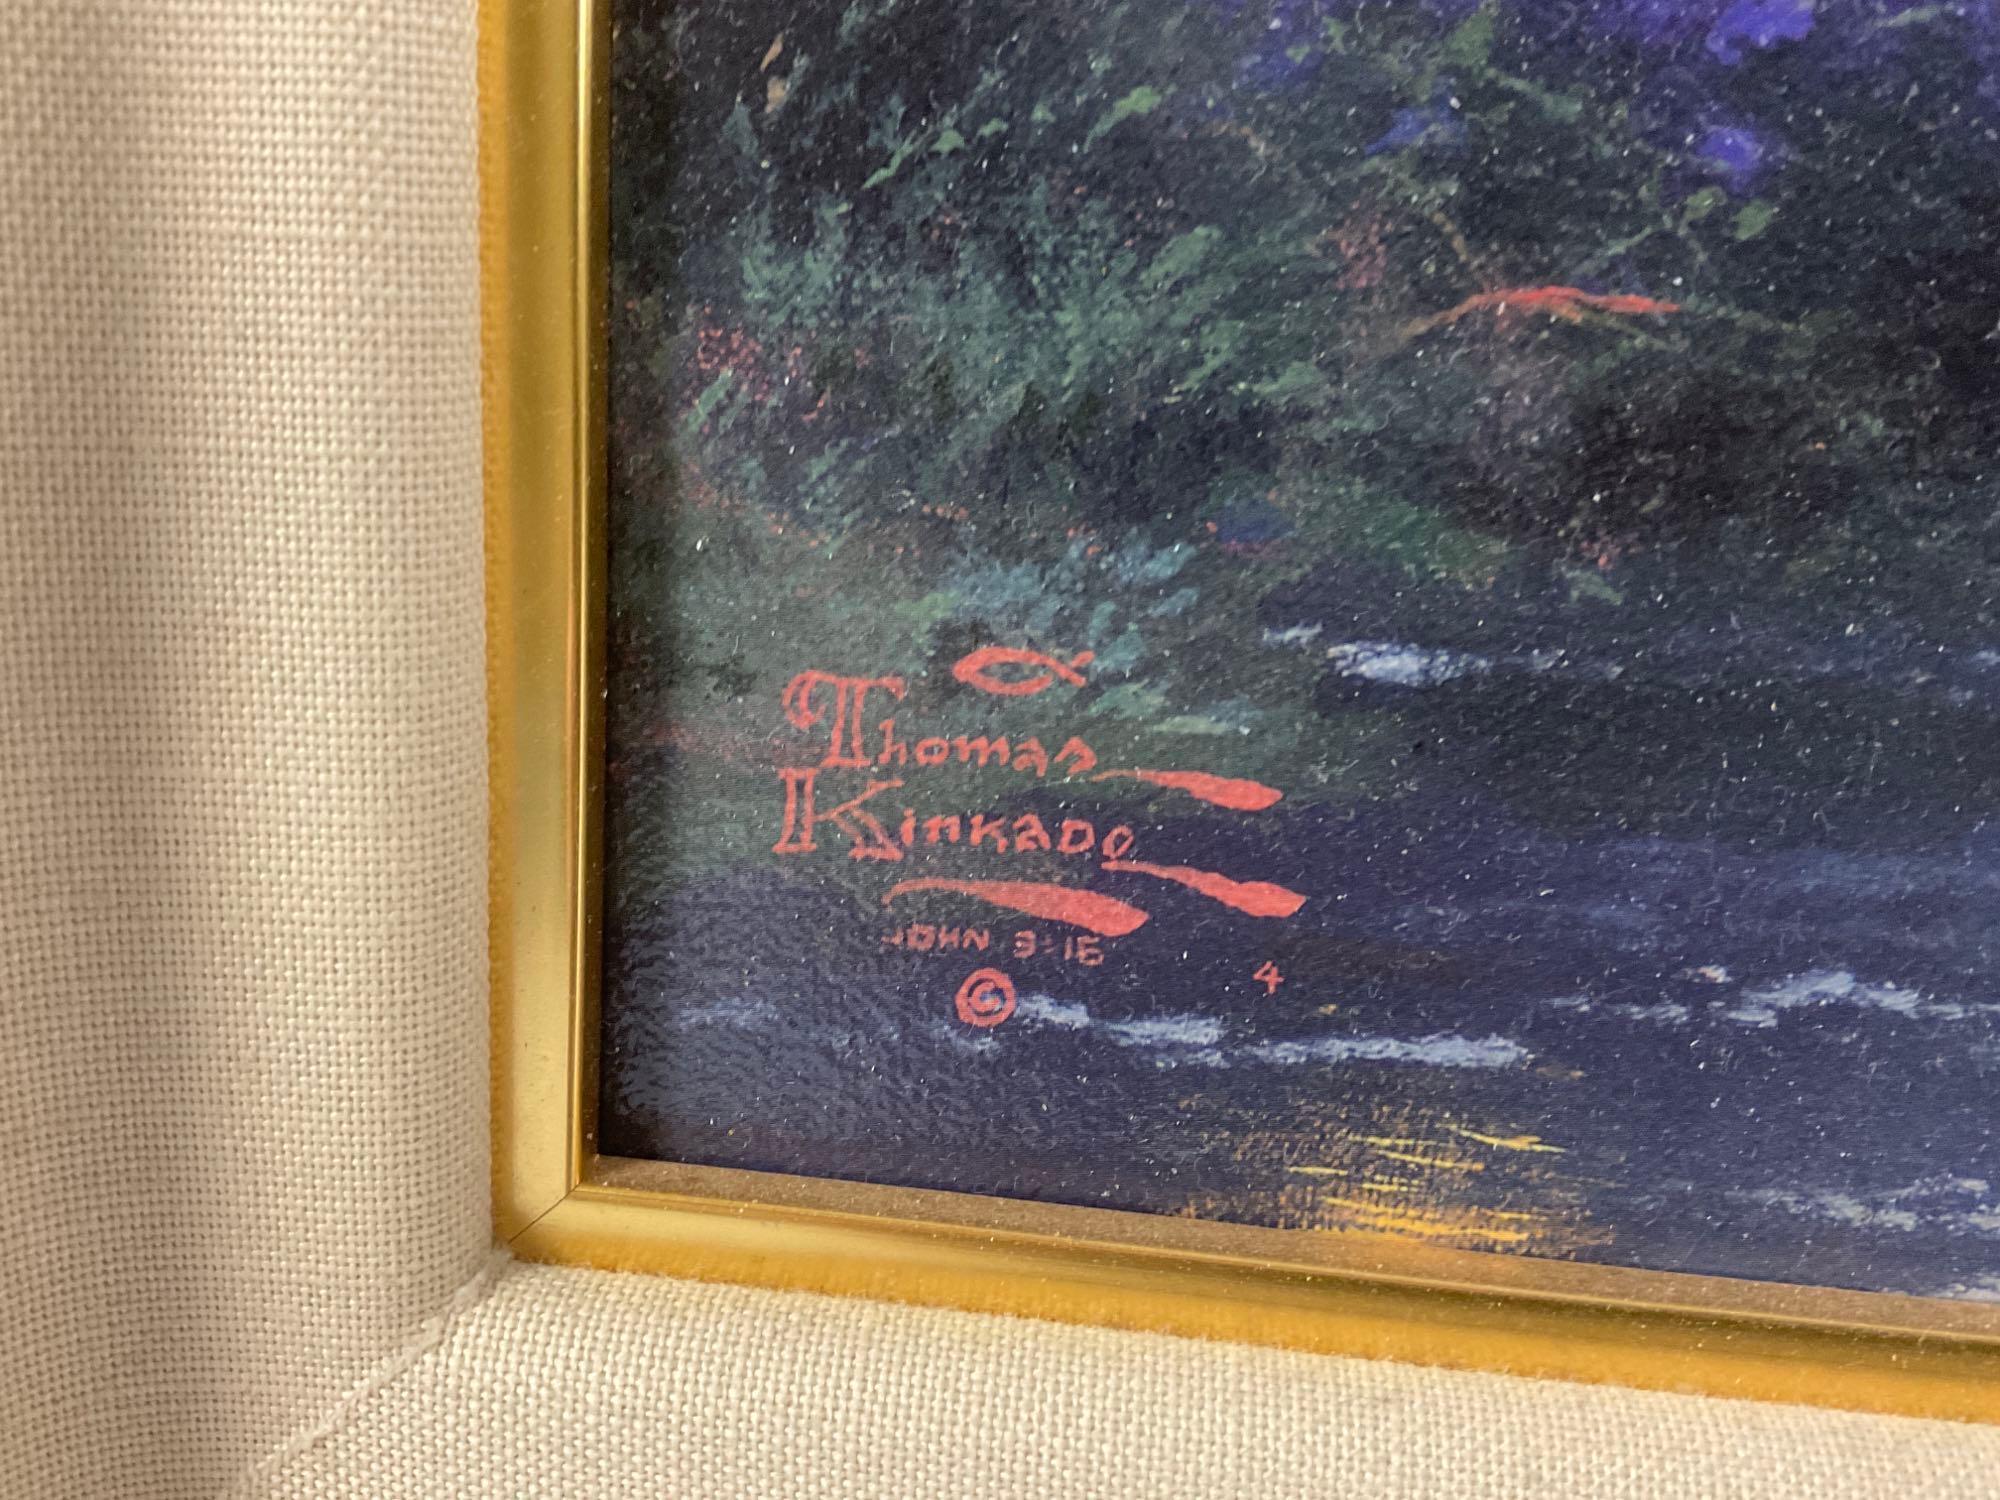 Nicely framed signed Thomas Kinkade TWILIGHT COTTAGE w/ hand drawn cabin, COA , 4090/4950 S/N